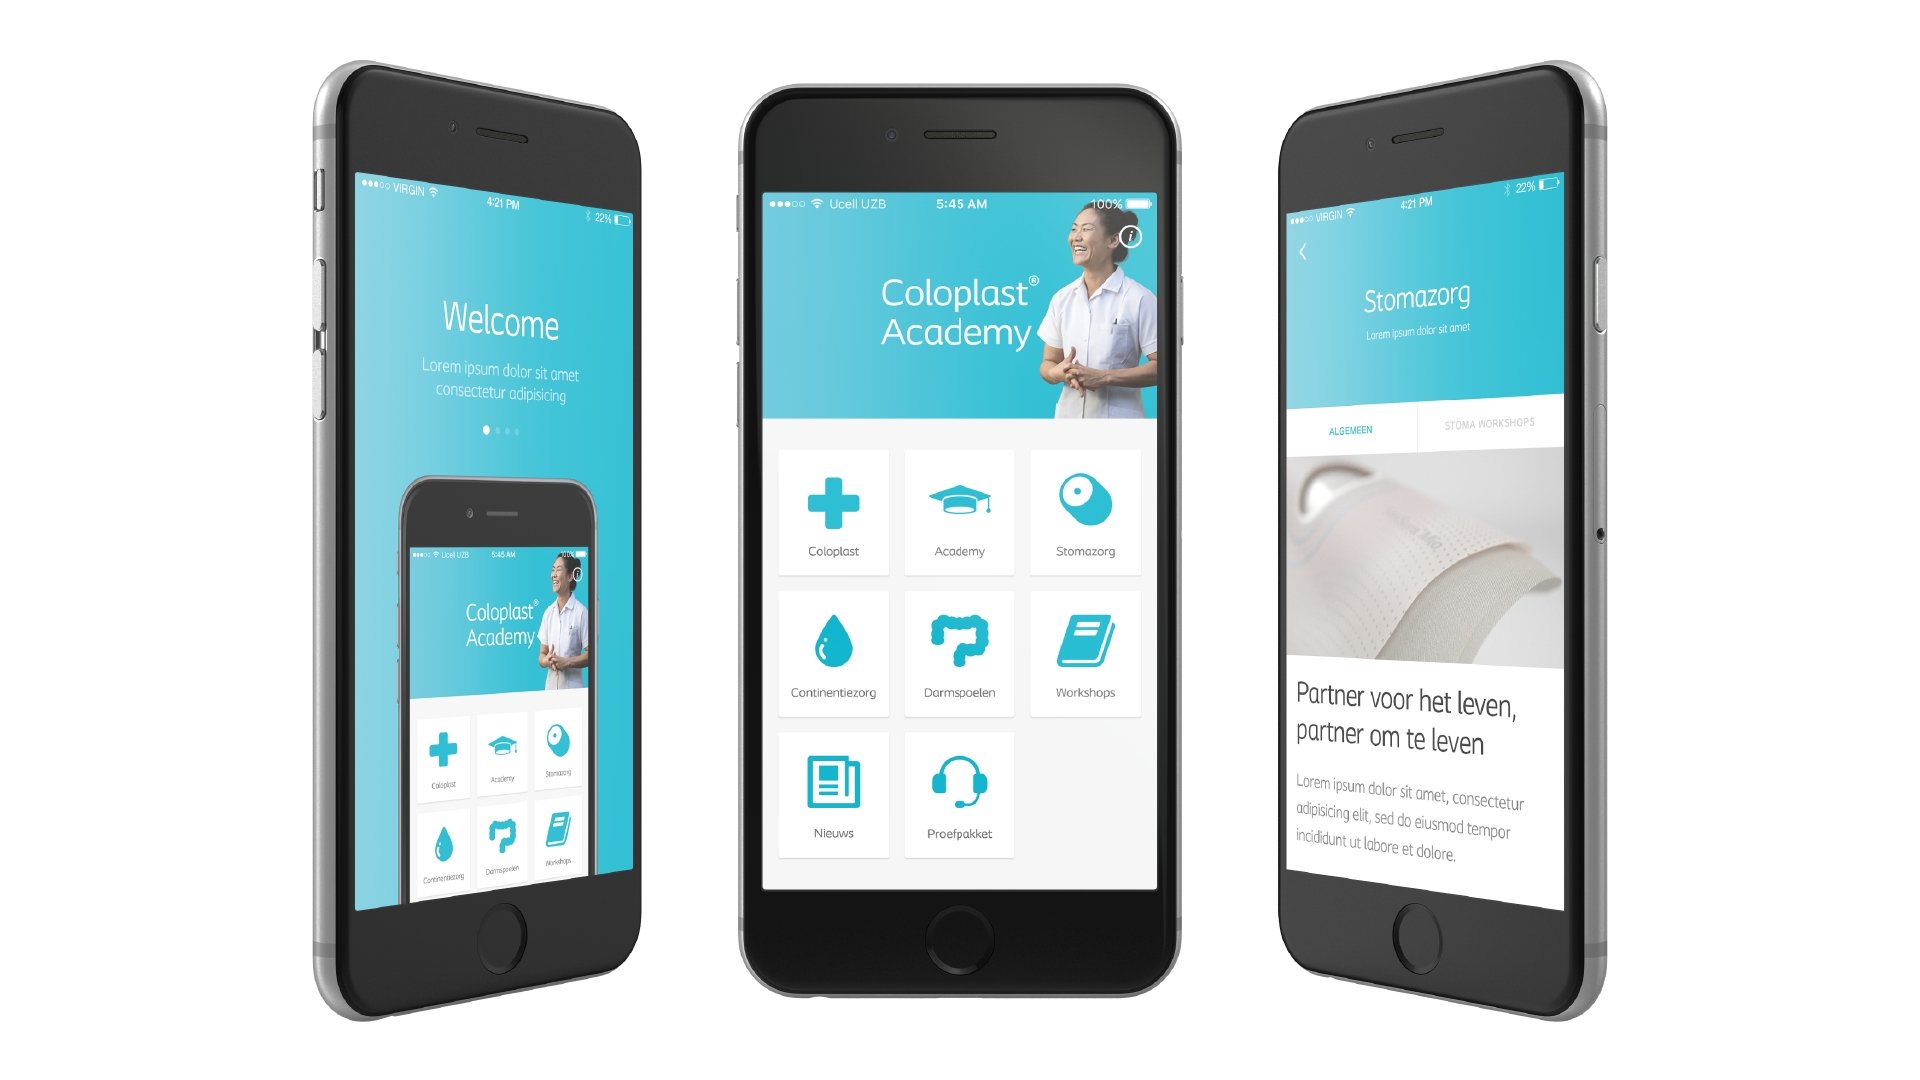 Coloplast Academy app interface mockup on phone by LOOP Associates